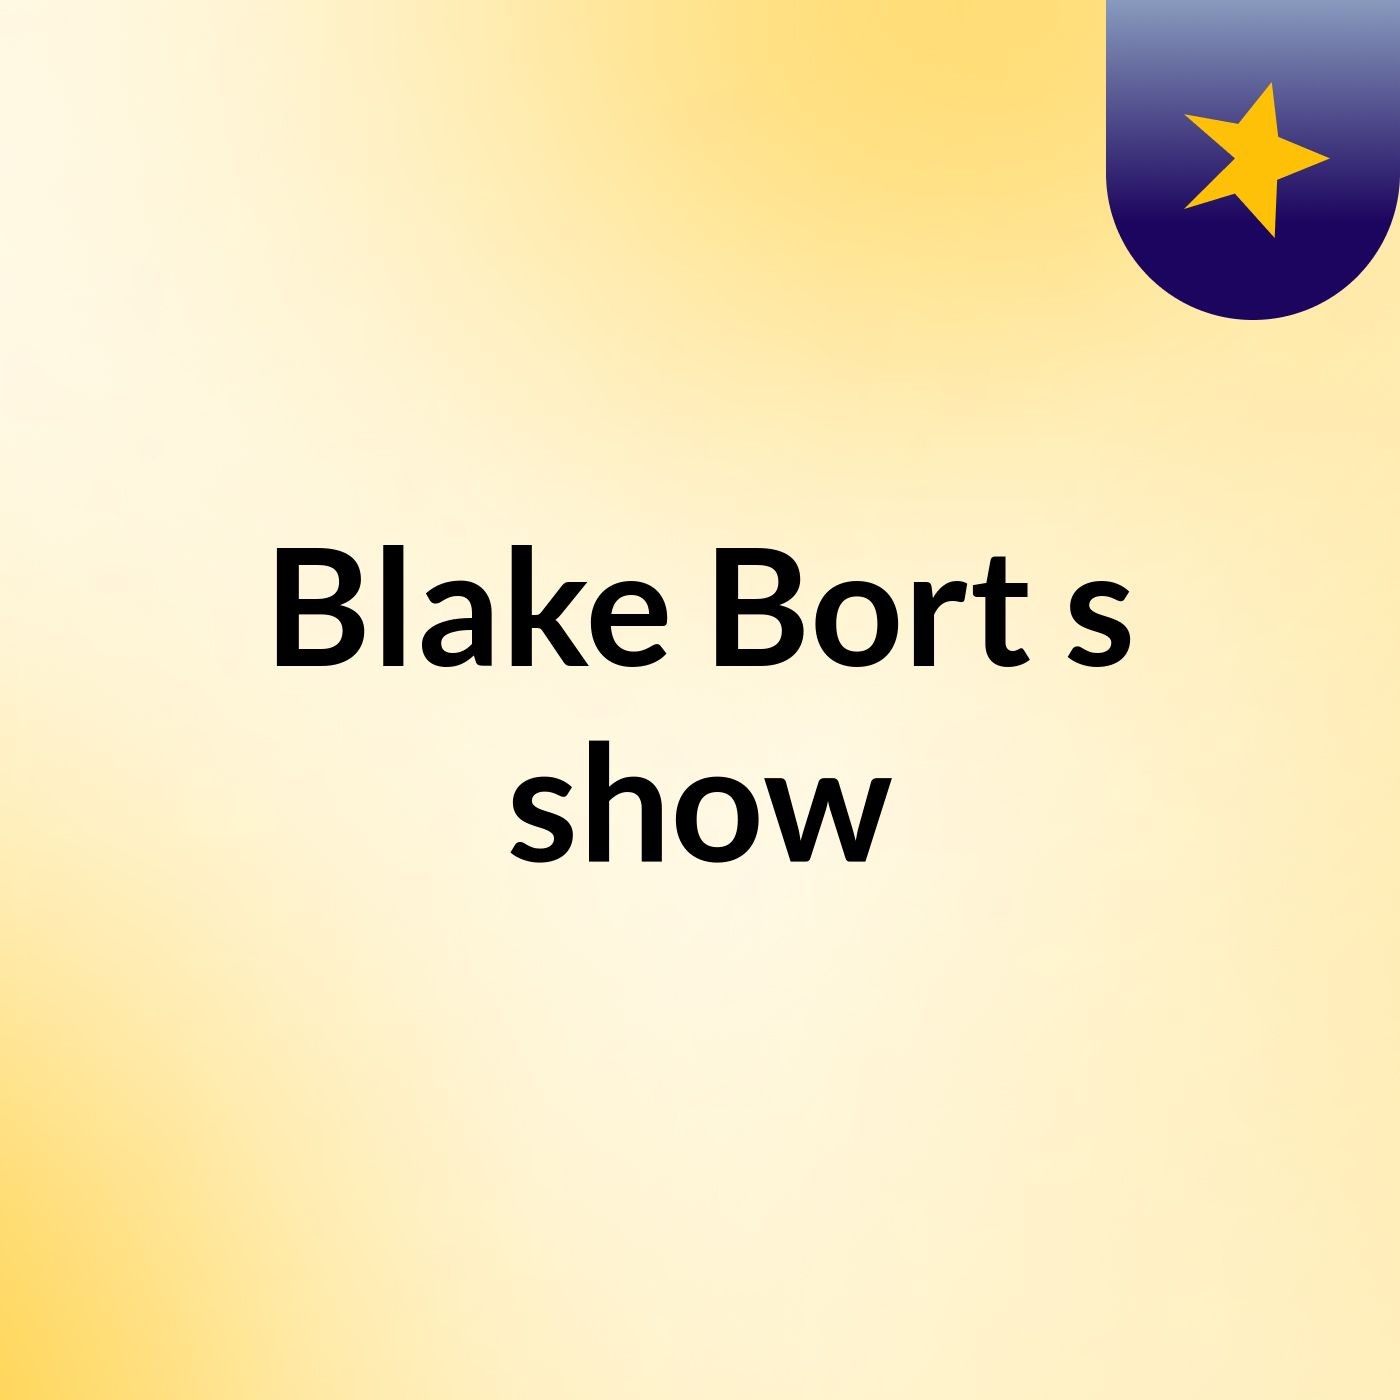 Blake Bort's show